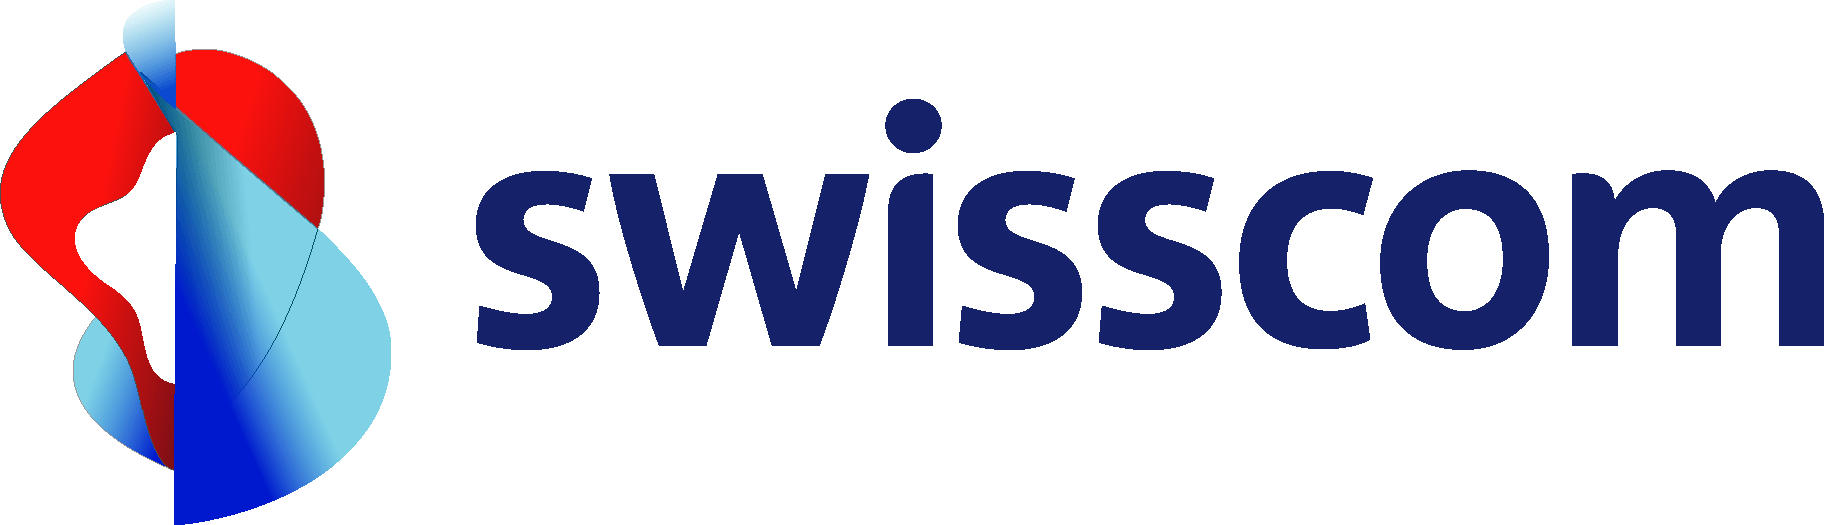 Swisscom Logo png